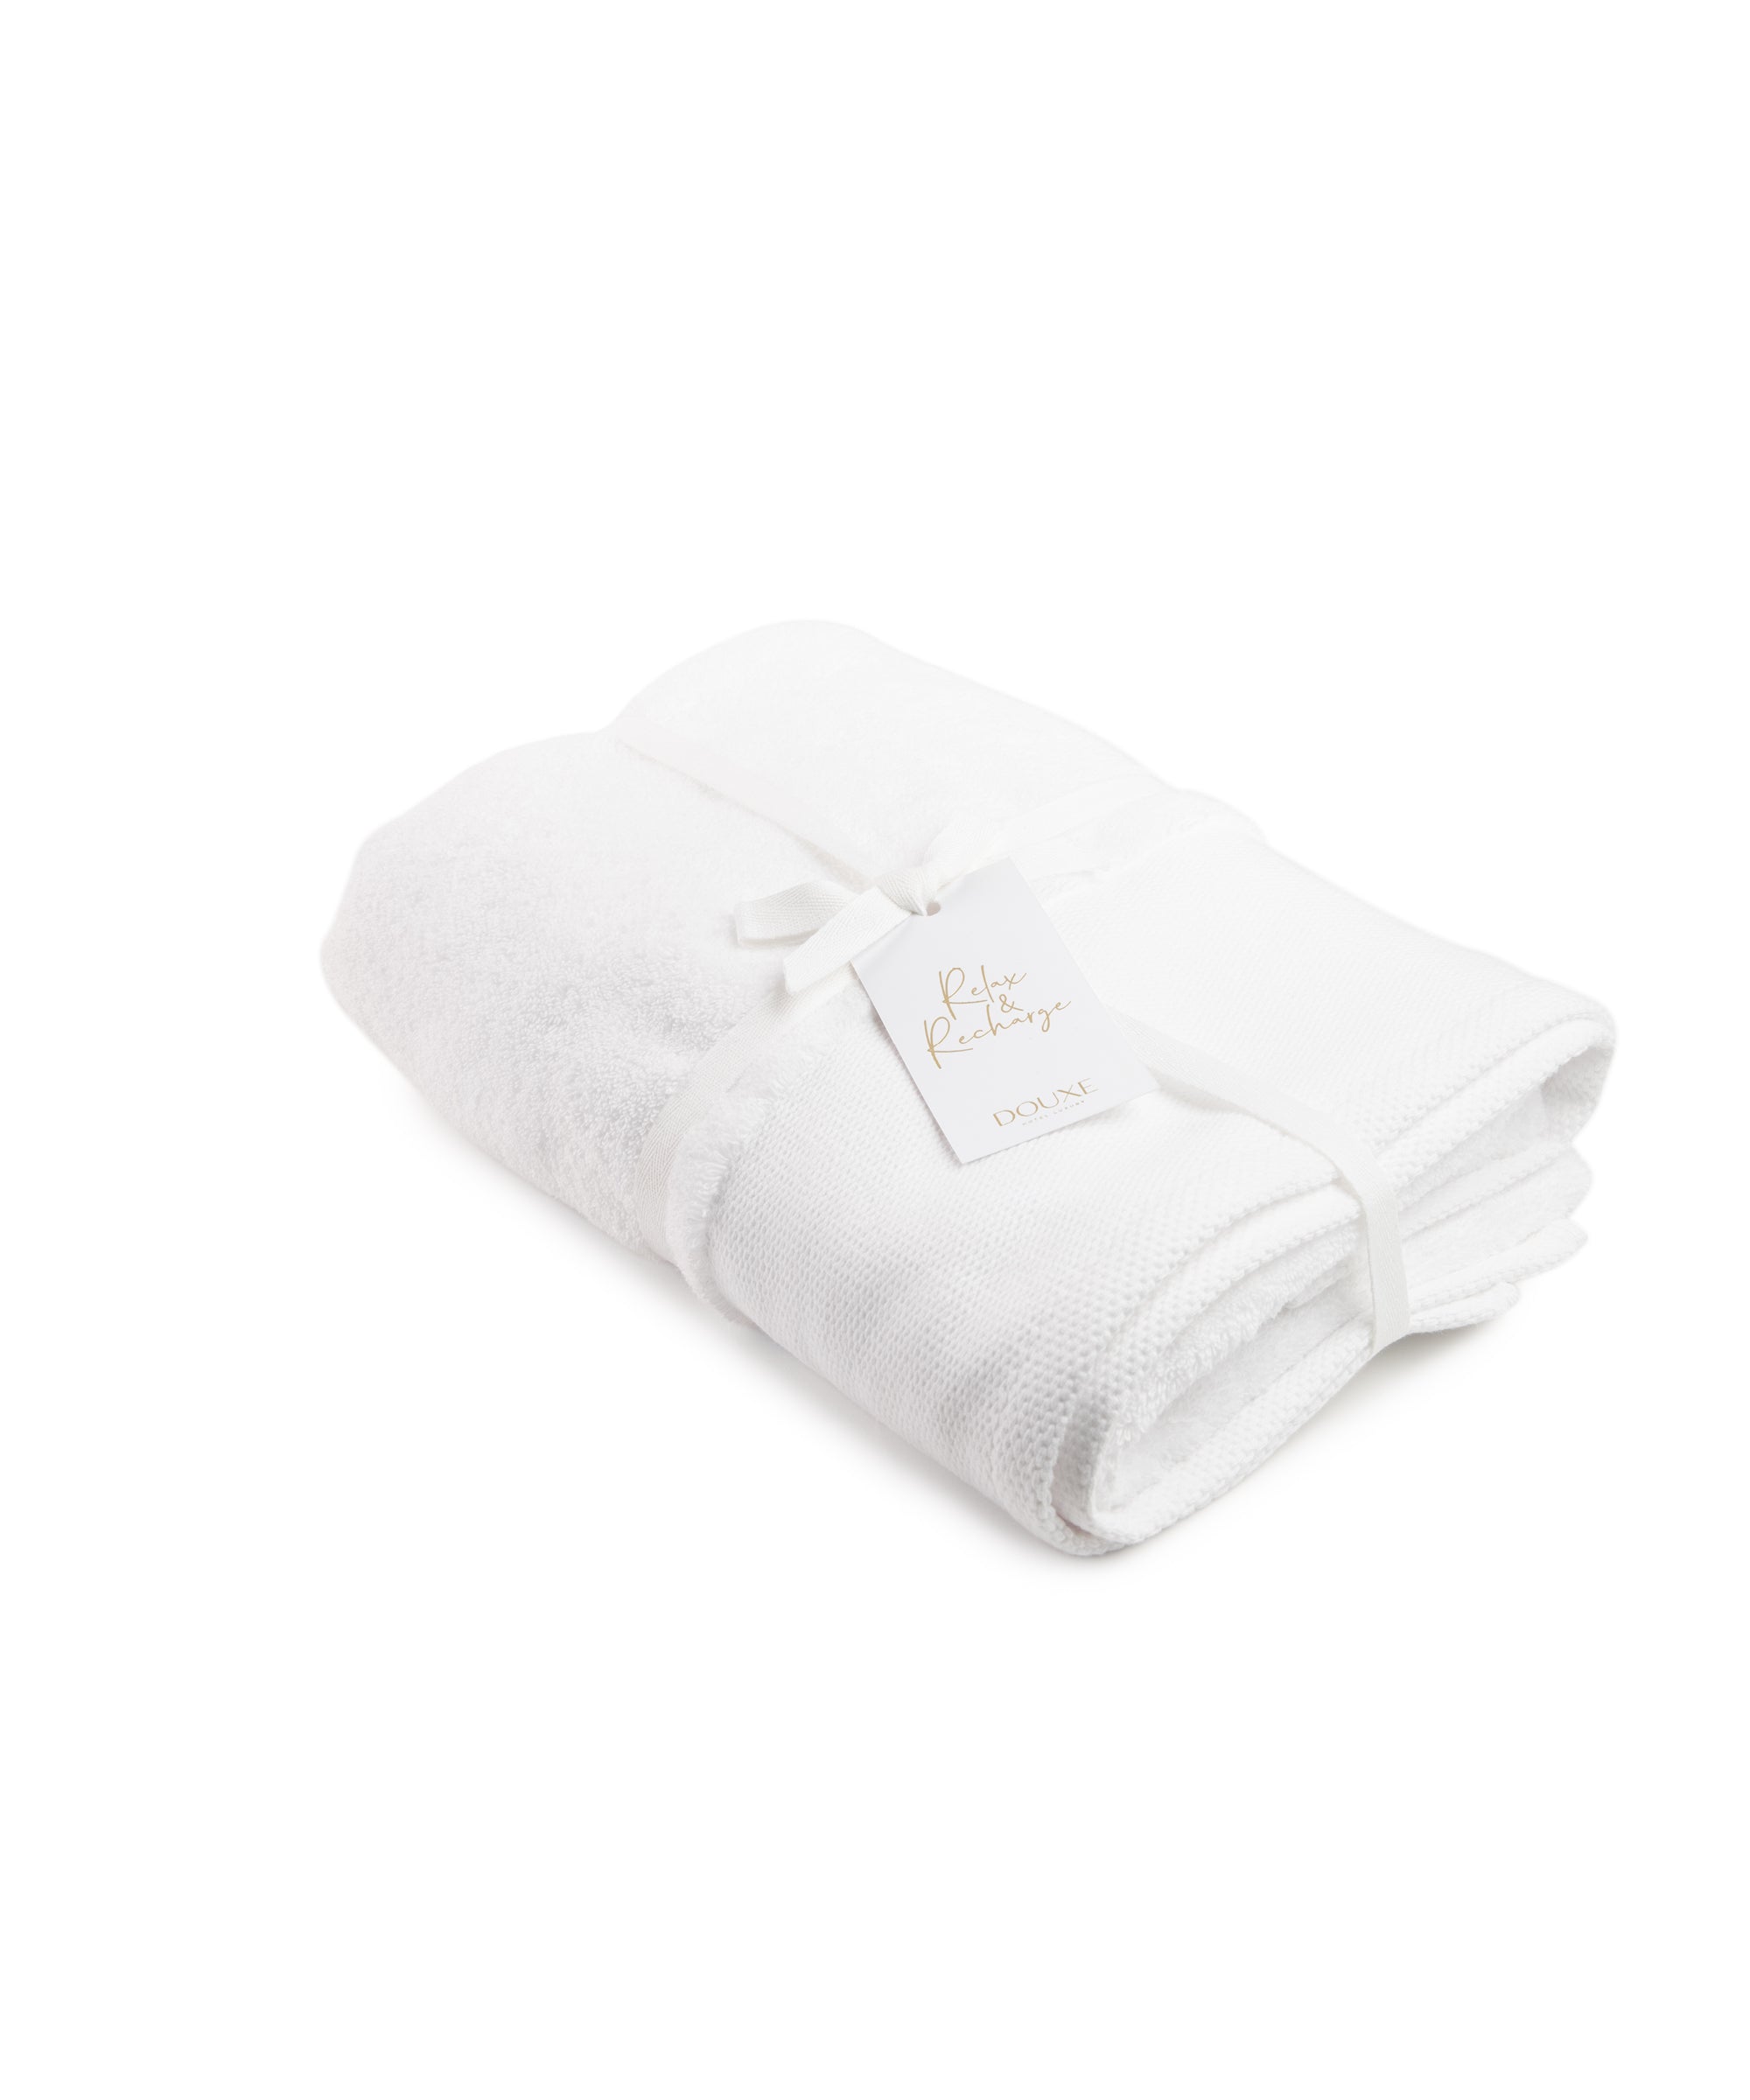 Hotel Towels, White, luxury hotel quality 70x140